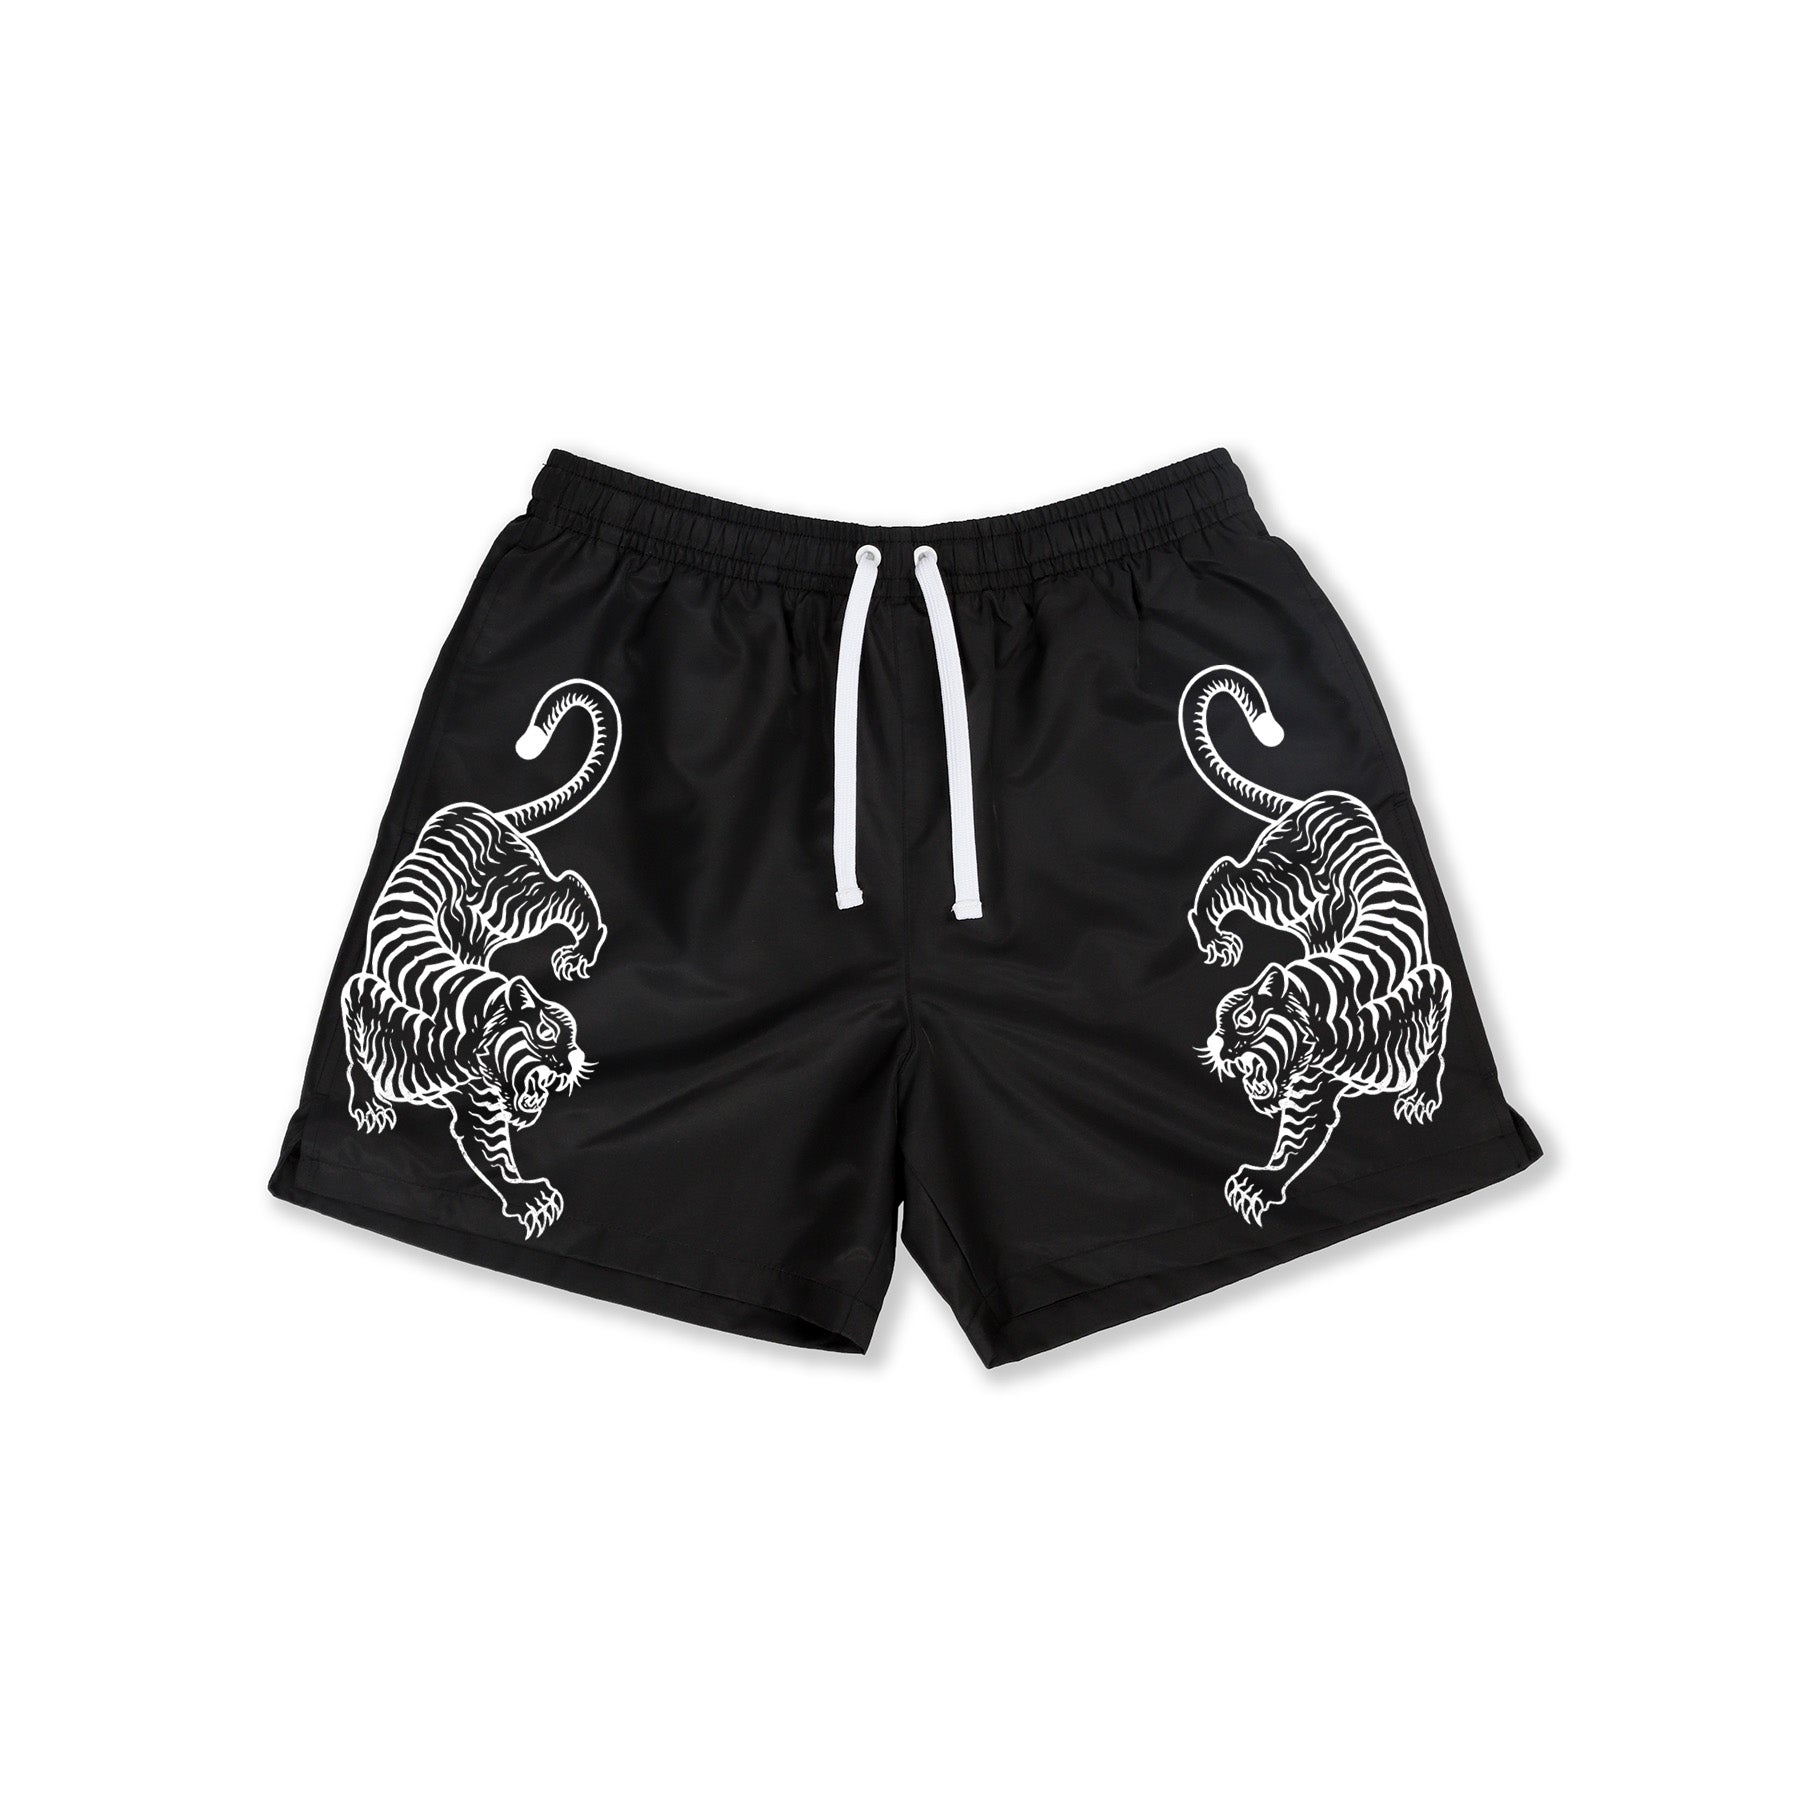 Twin Tiger Nylon Shorts - Black